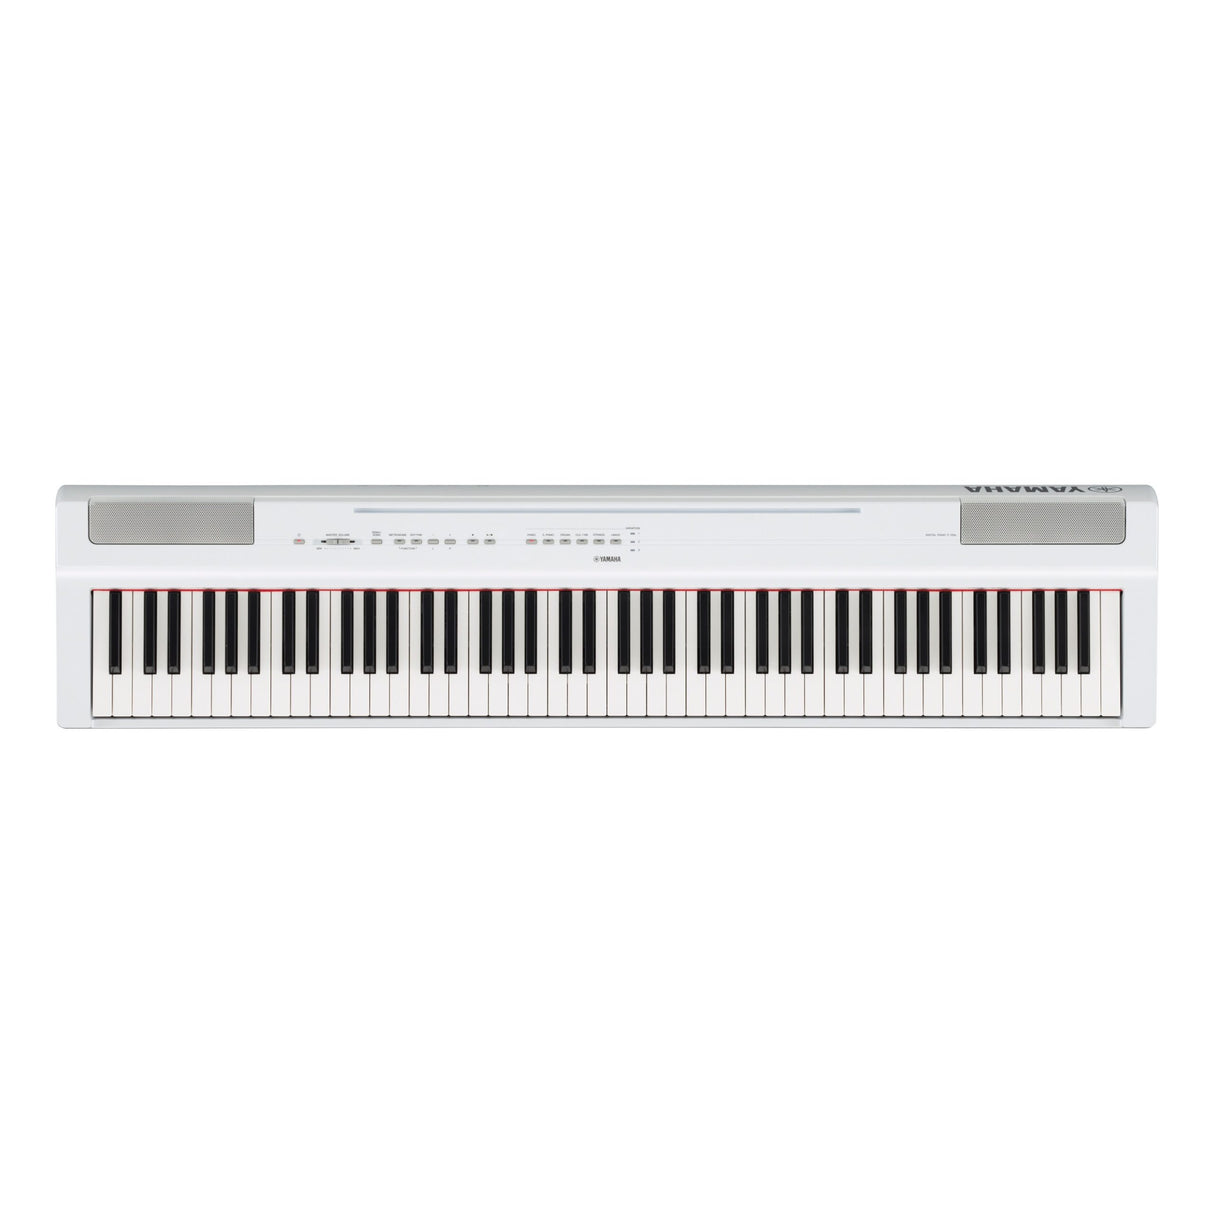 Yamaha P-125a 88-Note Portable Digital Piano, White